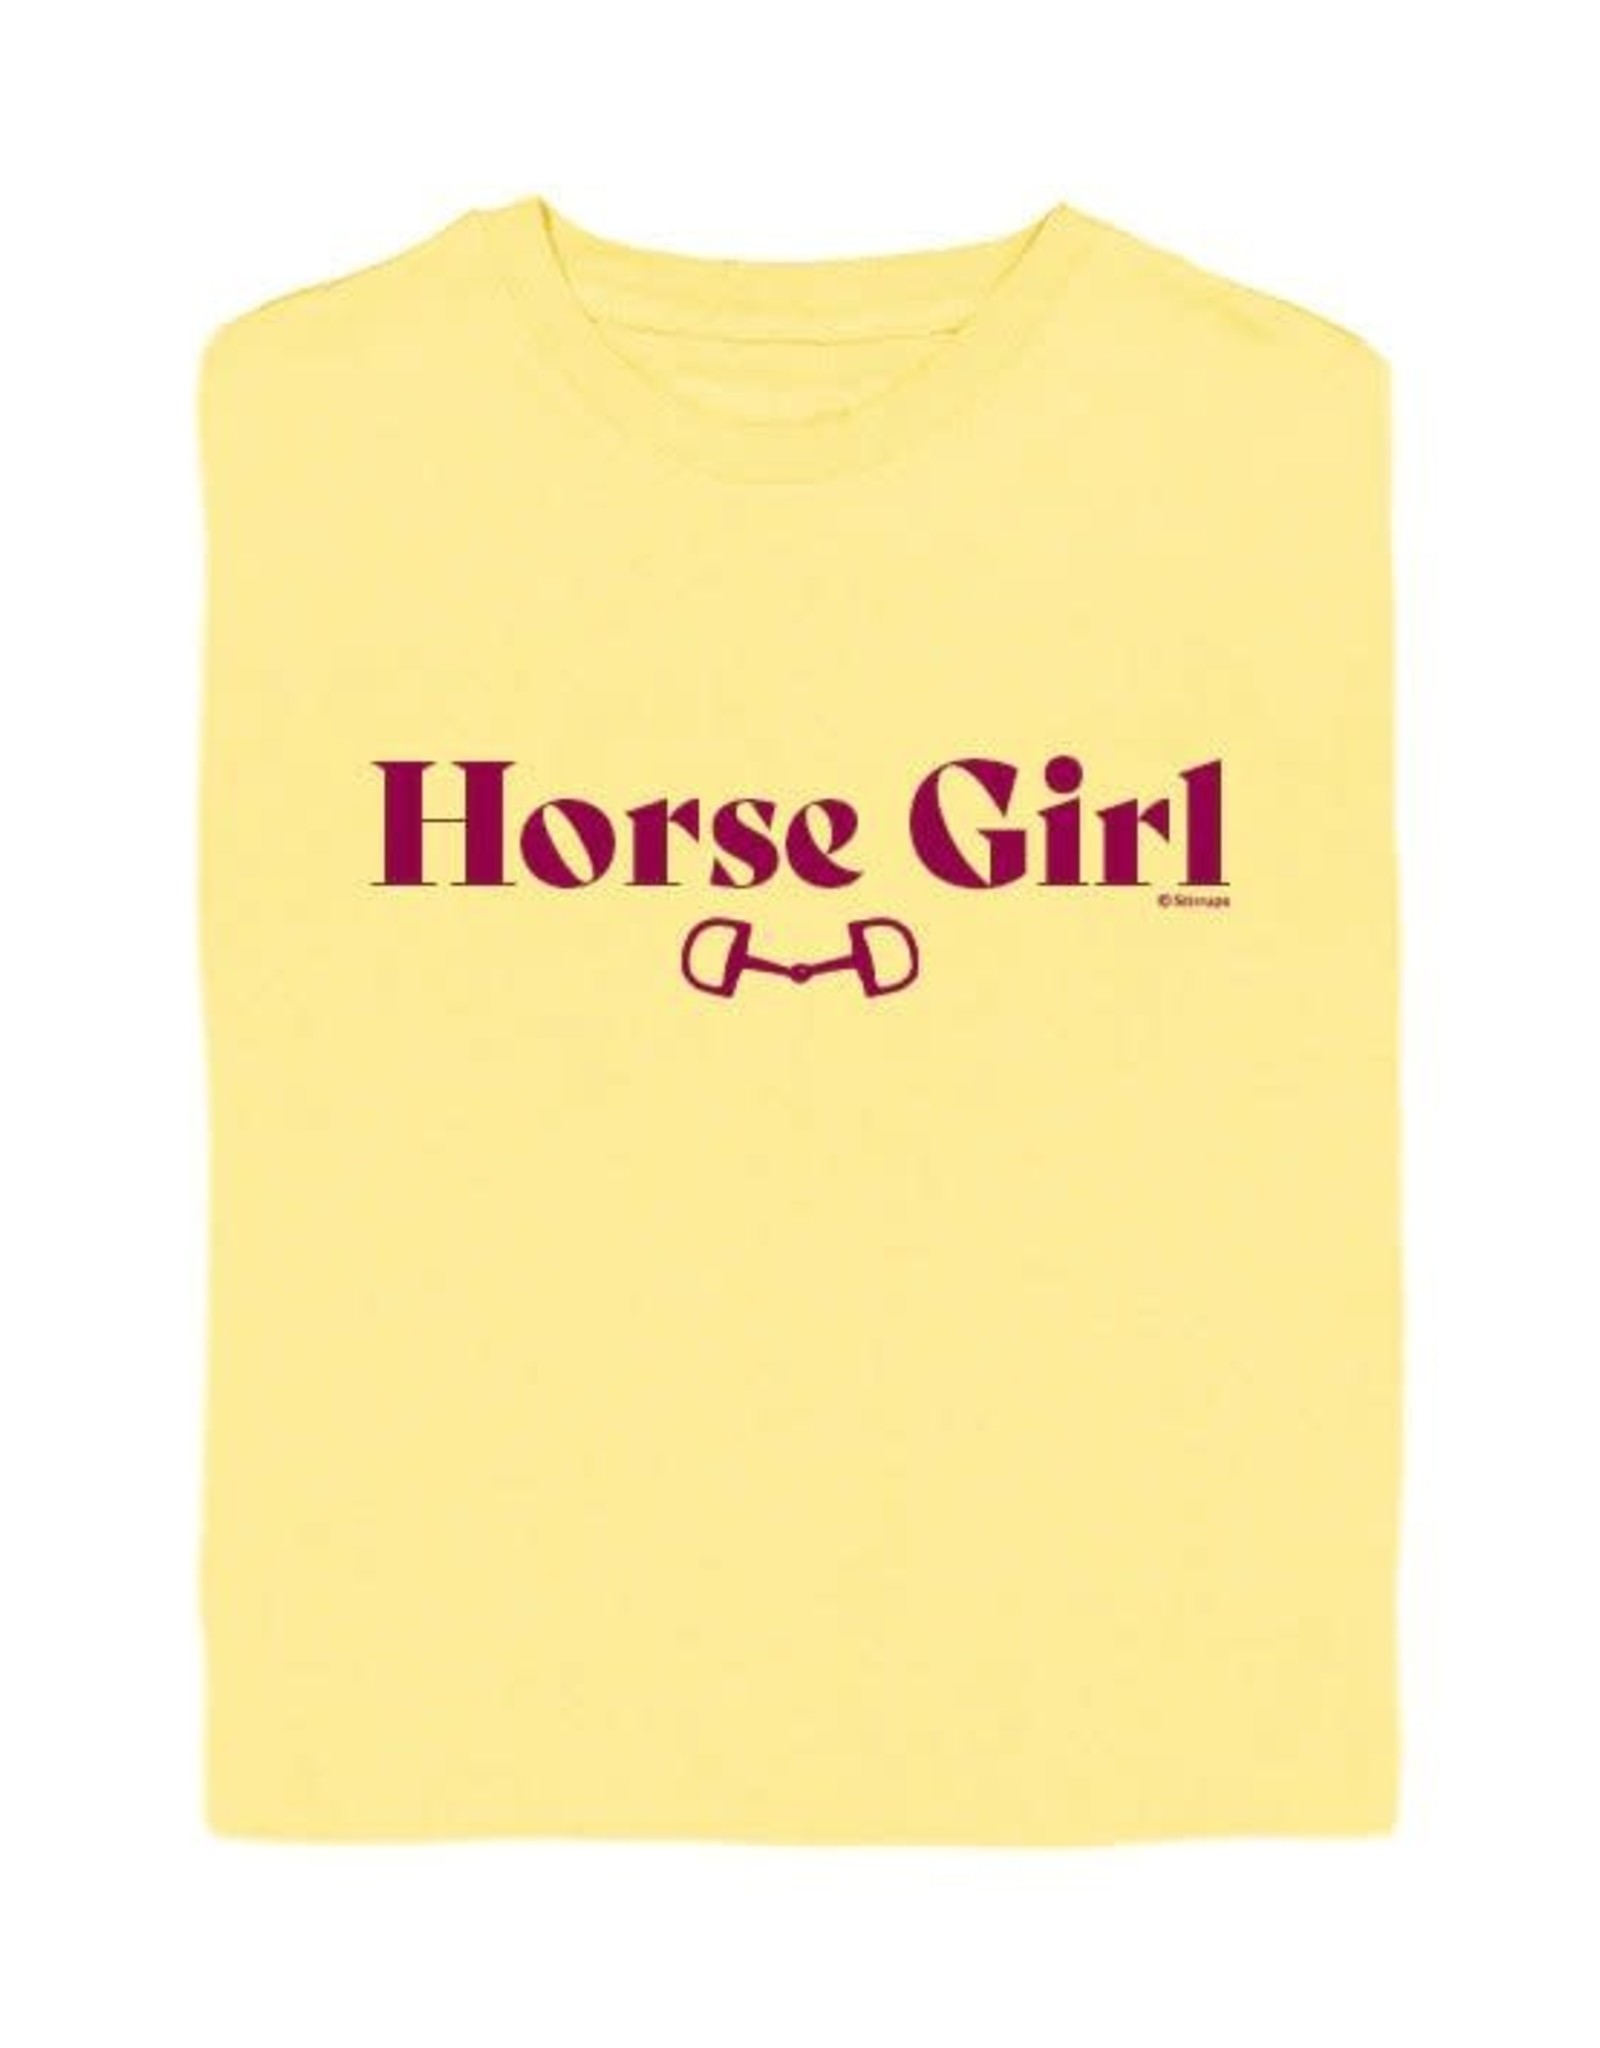 Stirrups Horse Girl Youth Short Sleeve Tee